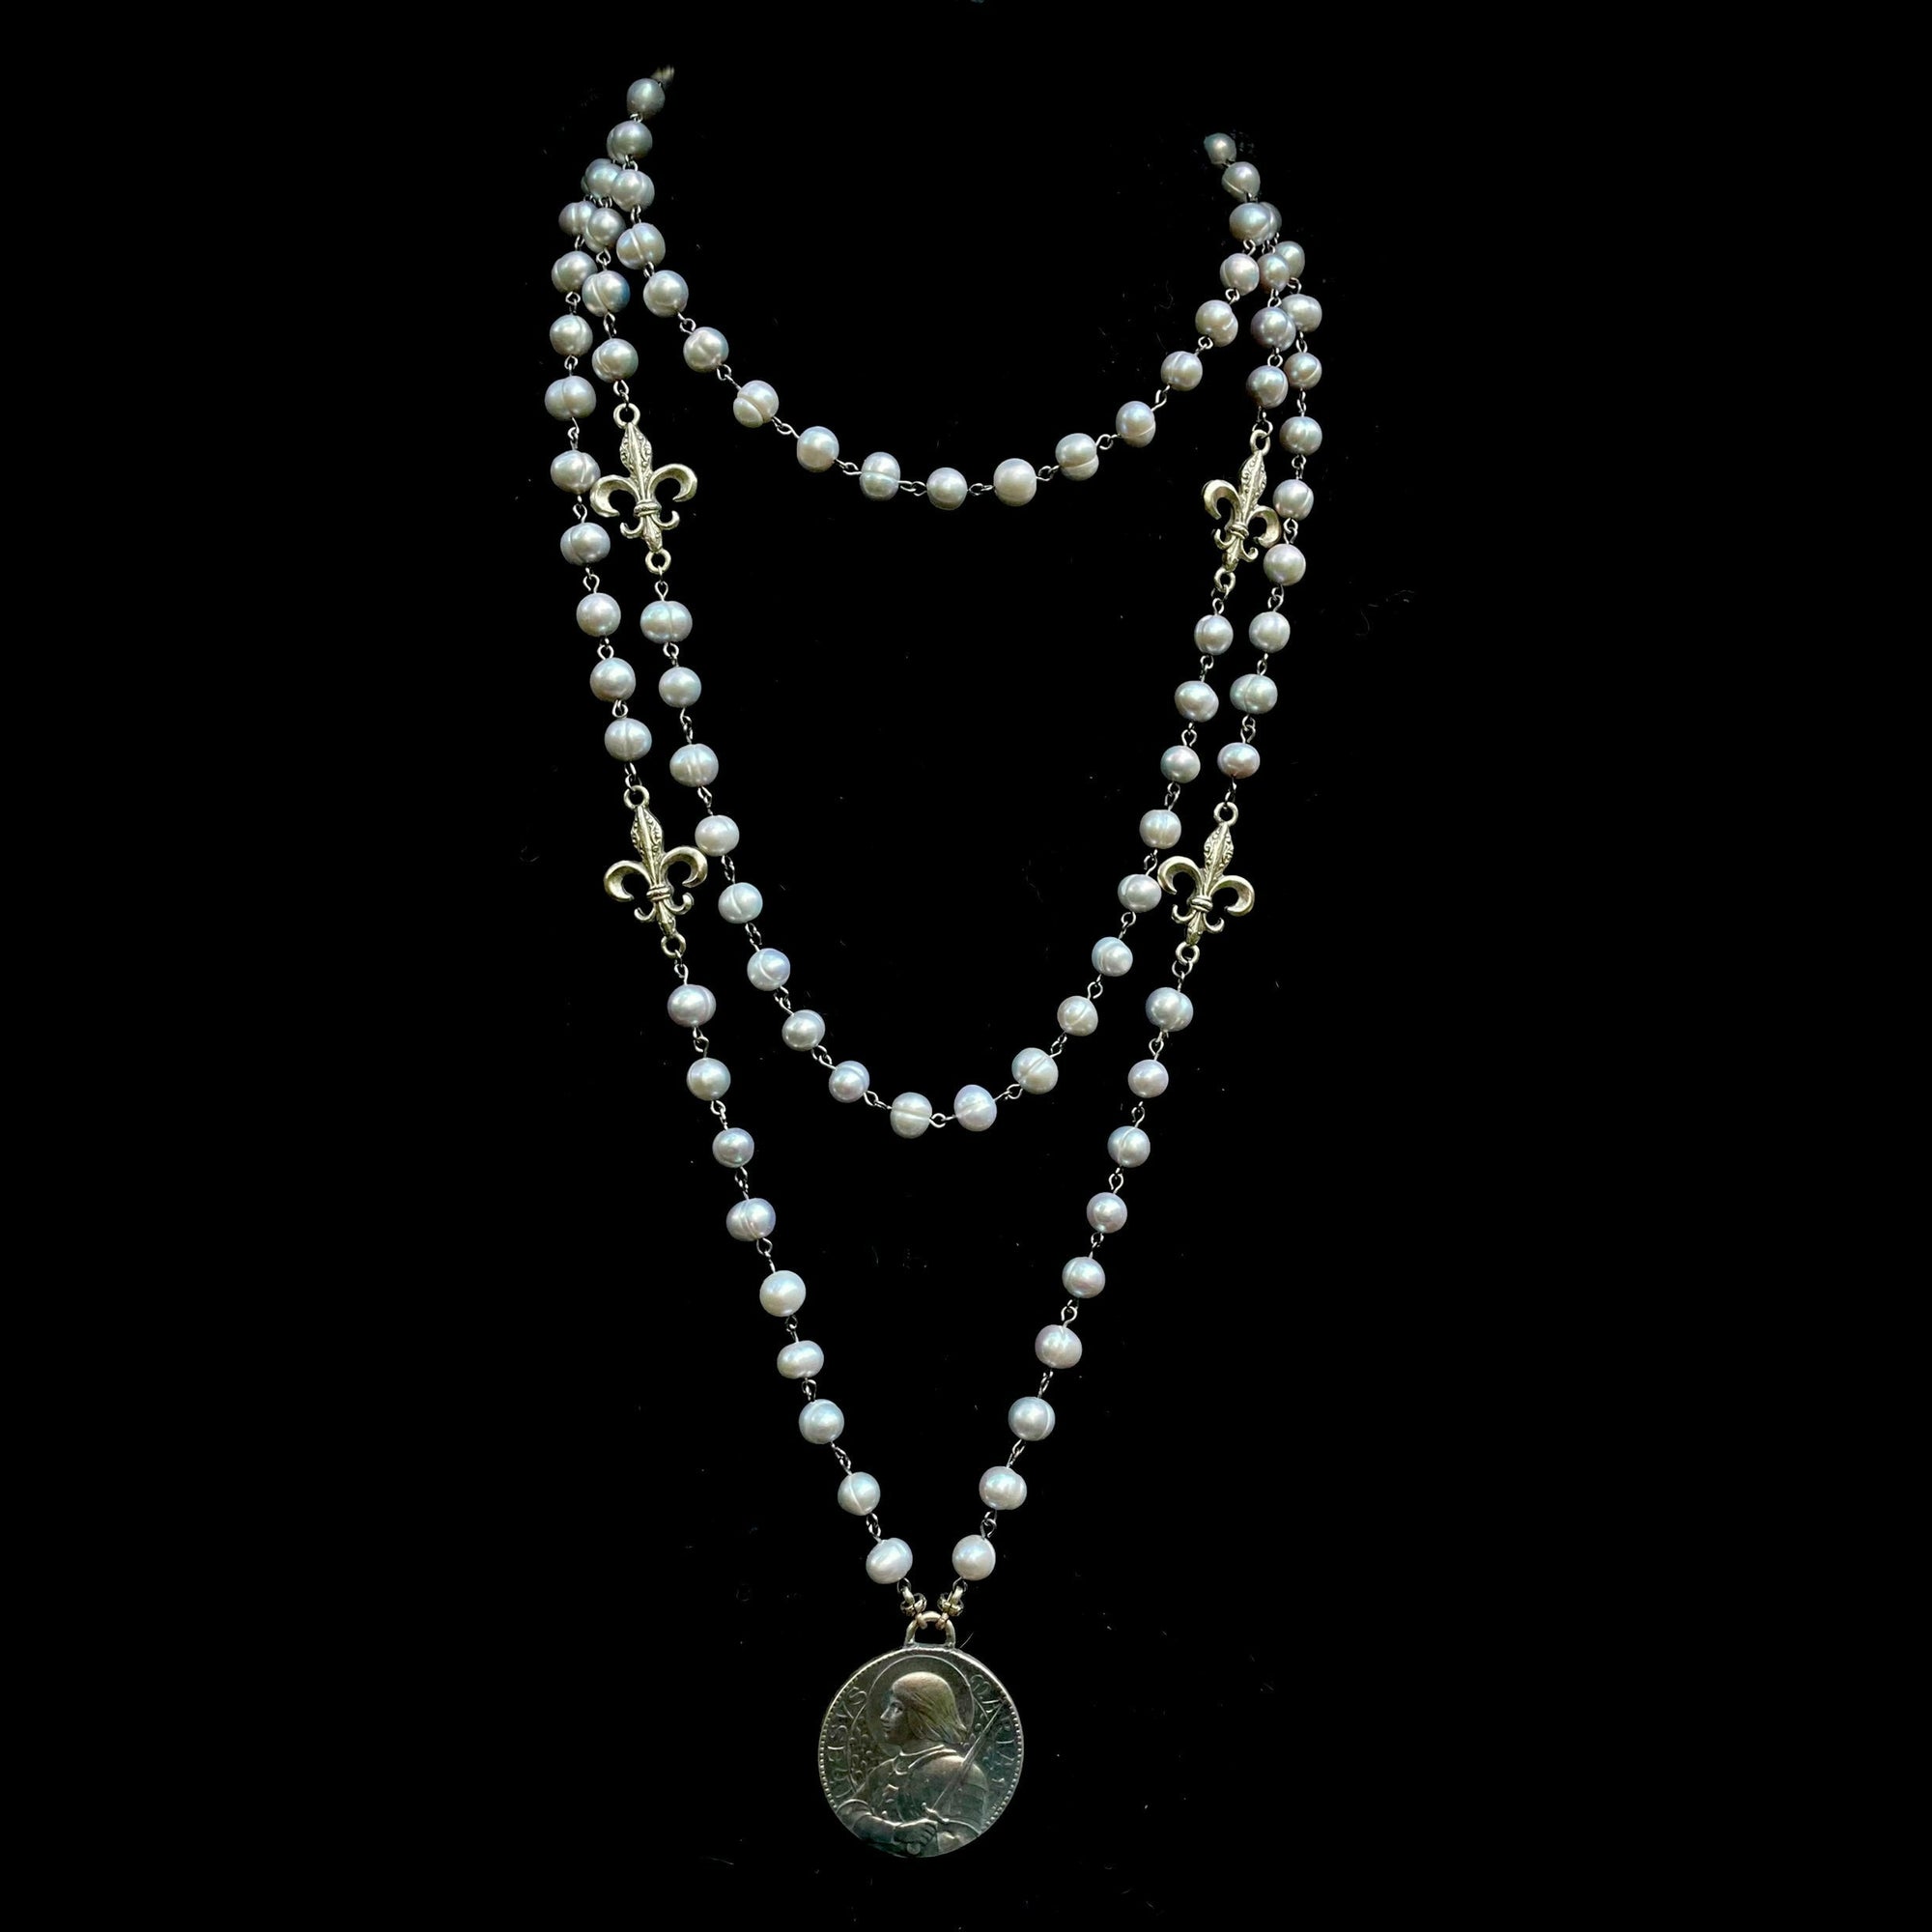 Moonglow Fleur de Lis Wrap Silver Freshwater Pearl Necklace / Wrap Bracelet  by Whispering Goddess